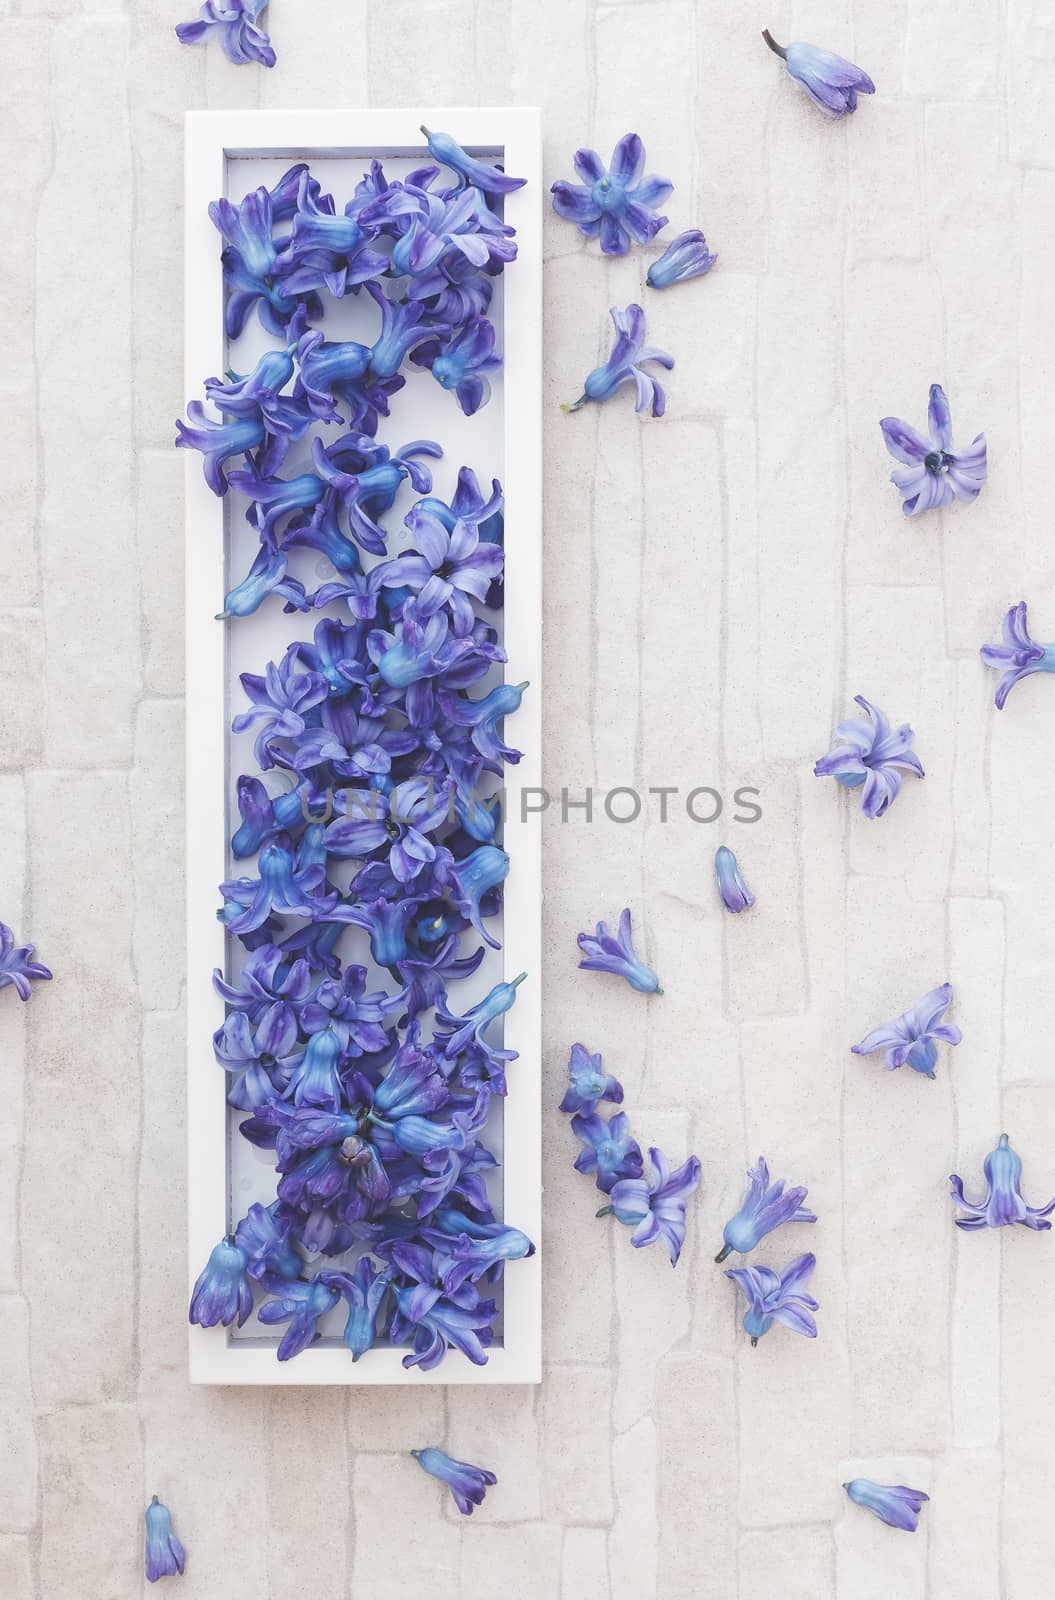 Spring Flowers Blue Hyacinth by Slast20